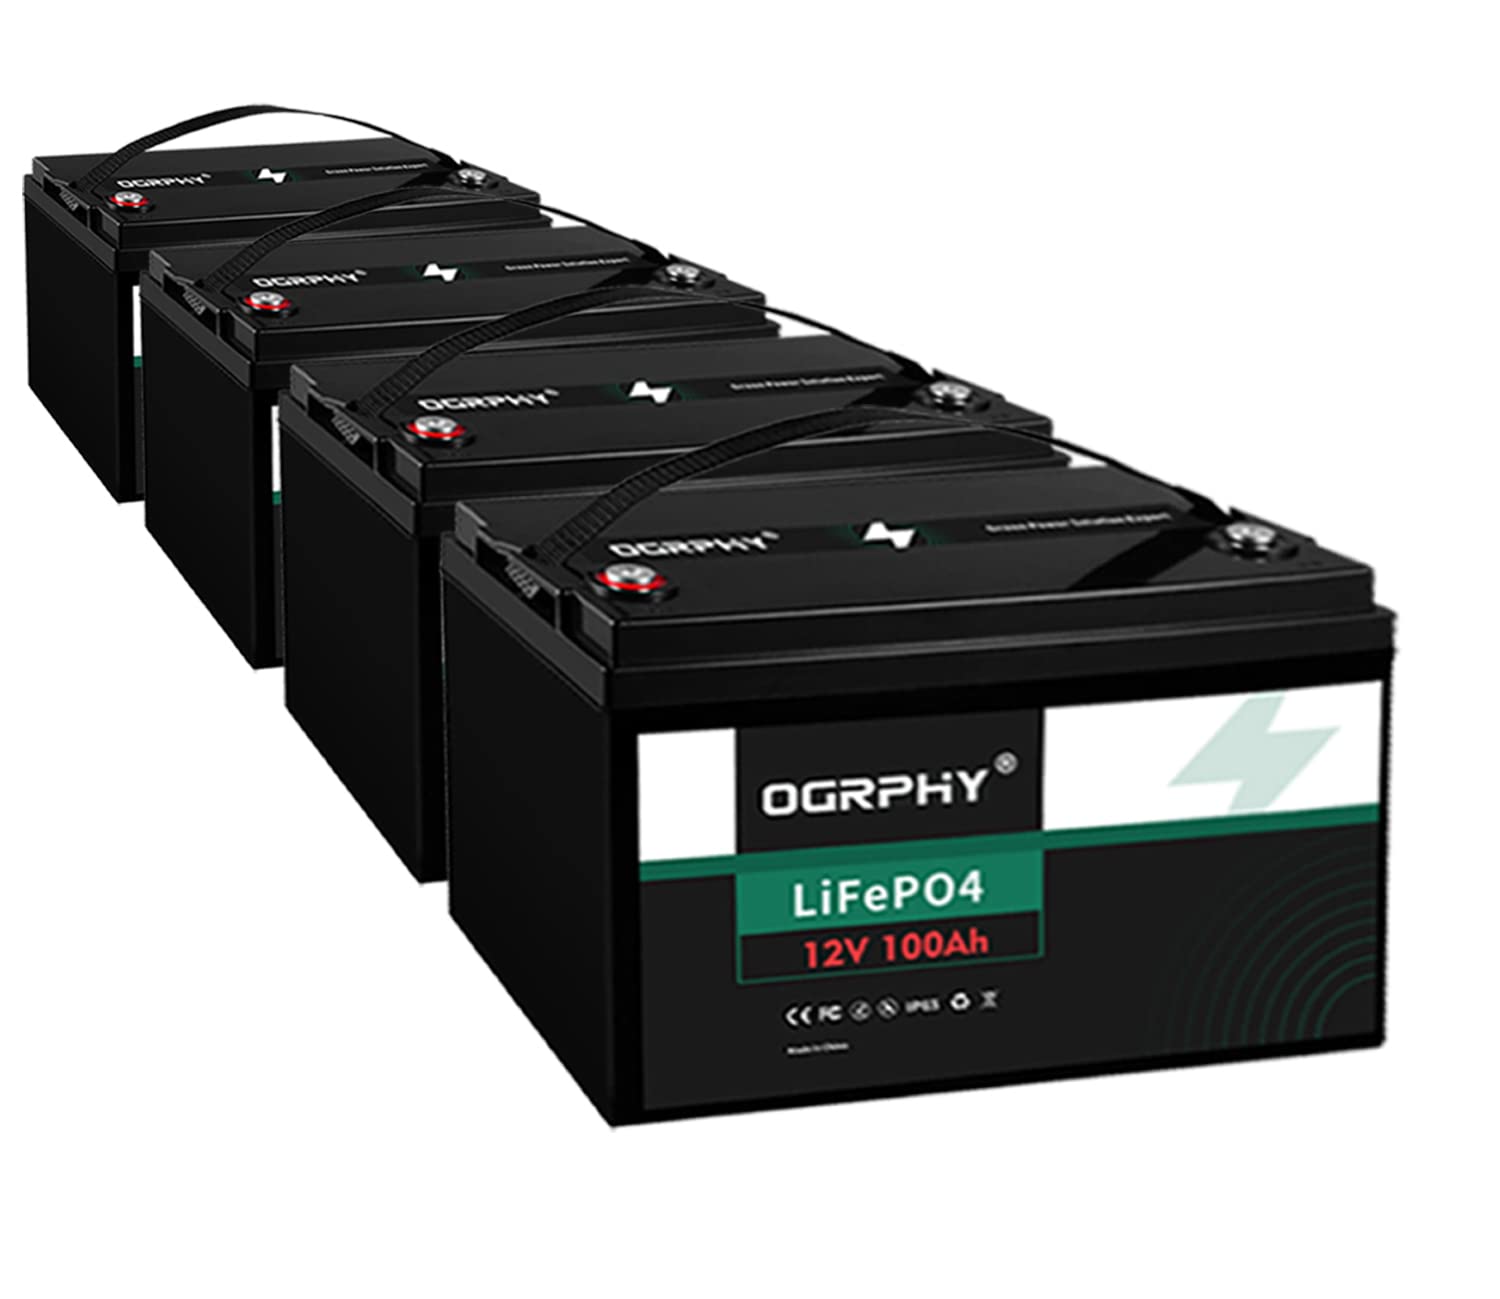 OGRPHY 12V 100Ah LiFePO4 Battery